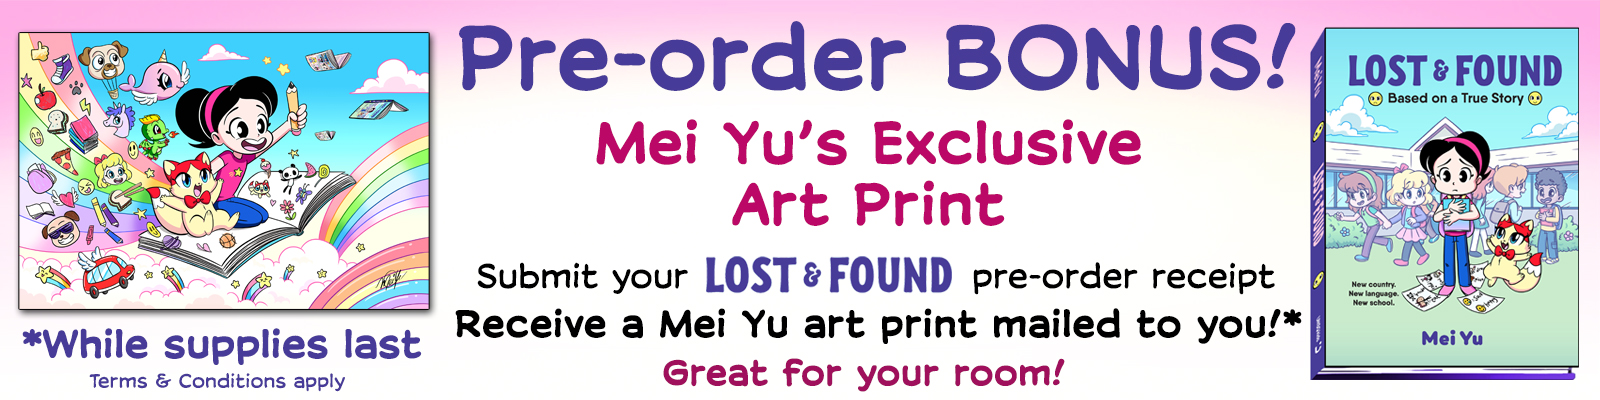 Banner for Lost & Found preorder bonus